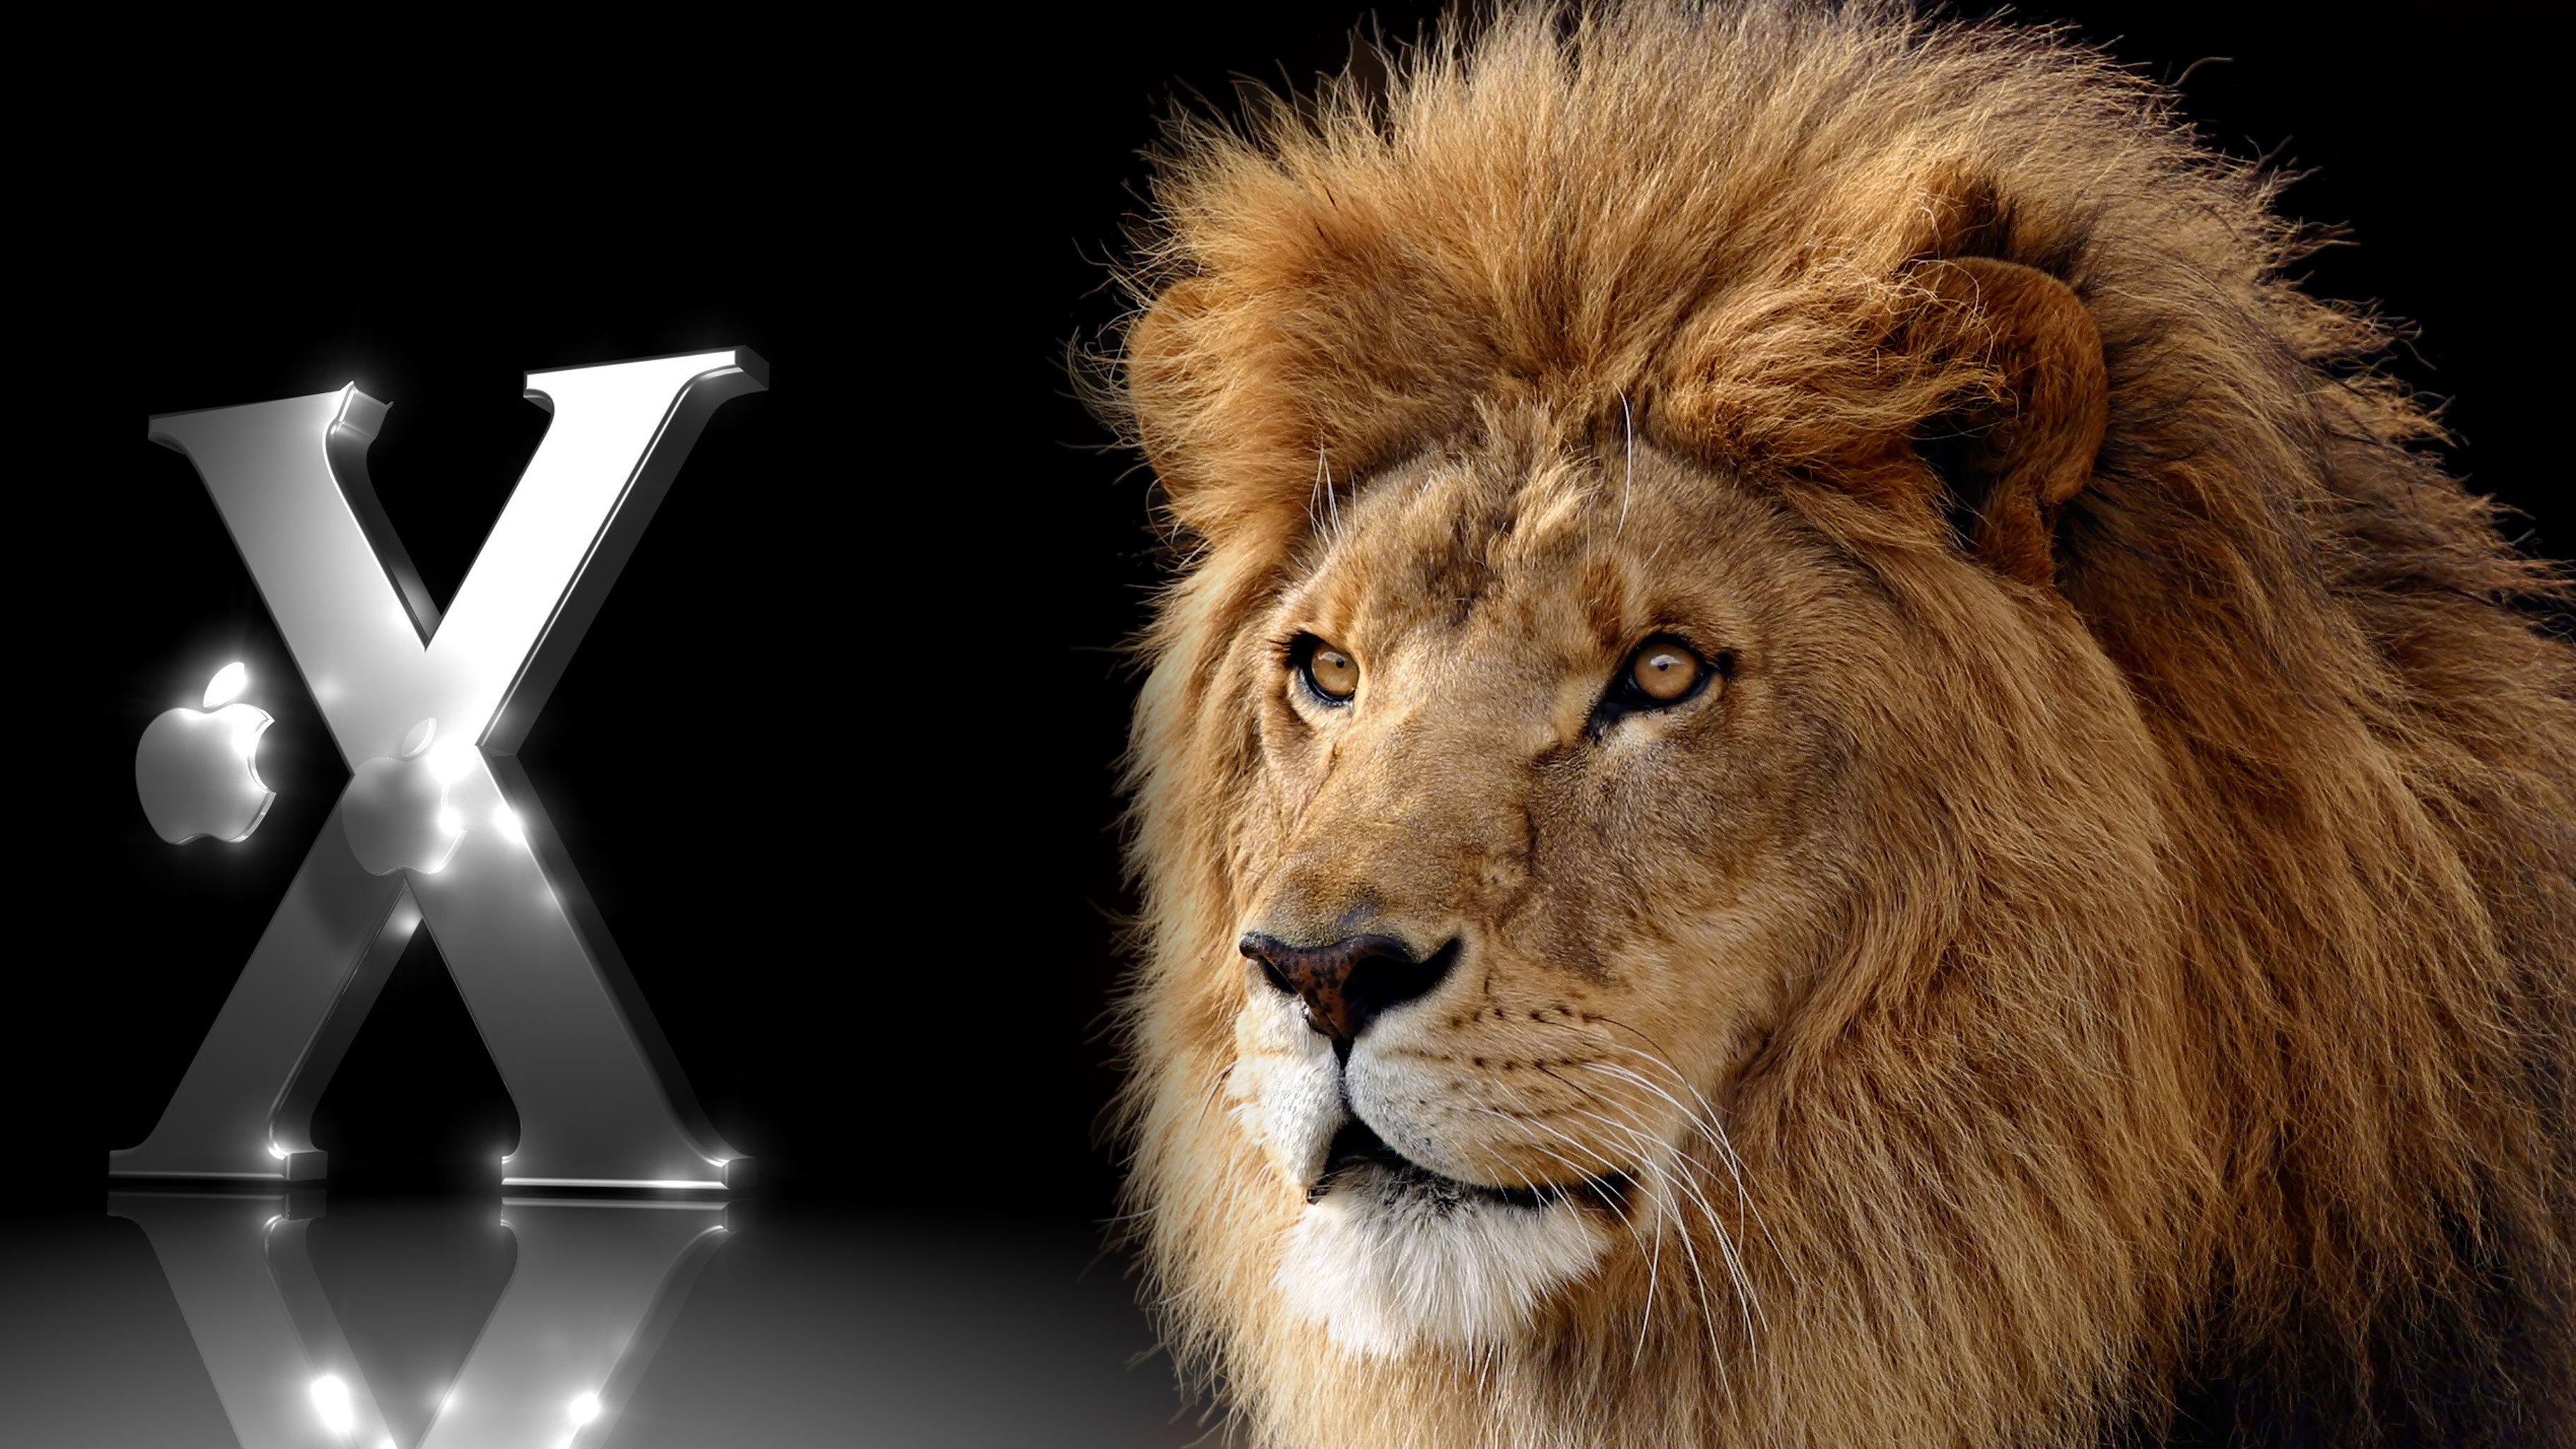 Apples Lion Release of Mac OS X Desktop Wallpaper